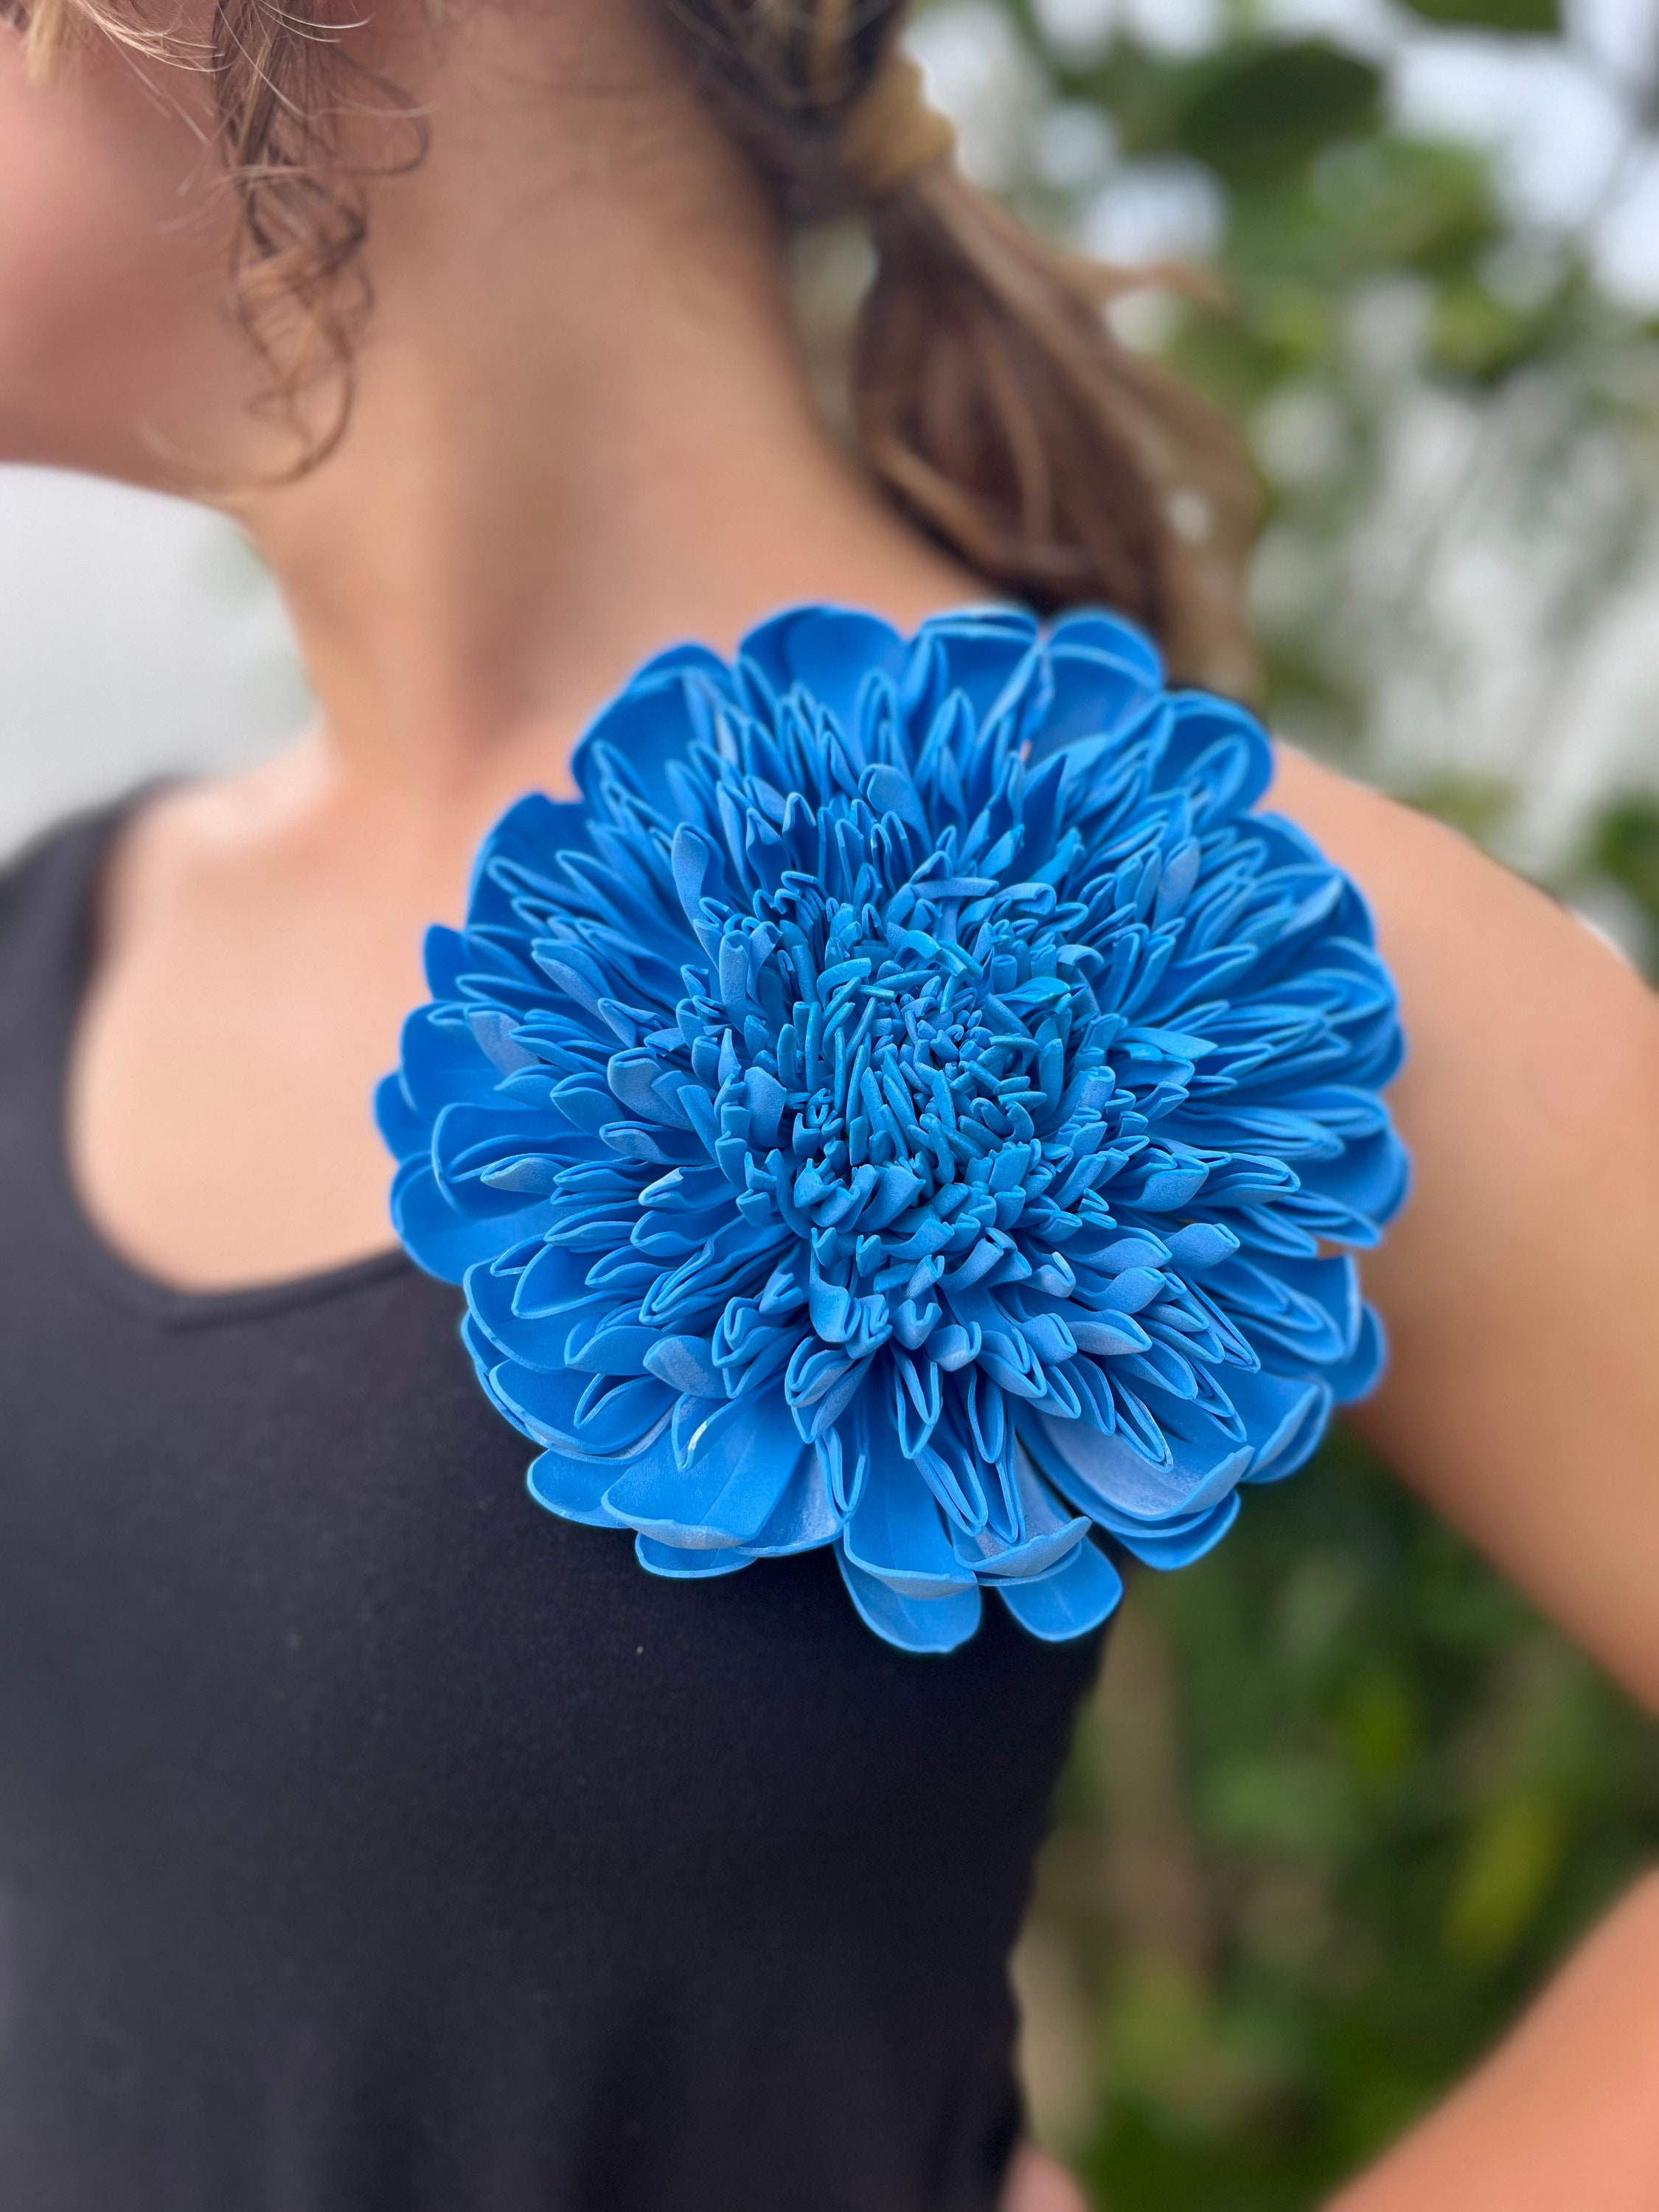 Large Blue Chrysanthemum Brooch Pin